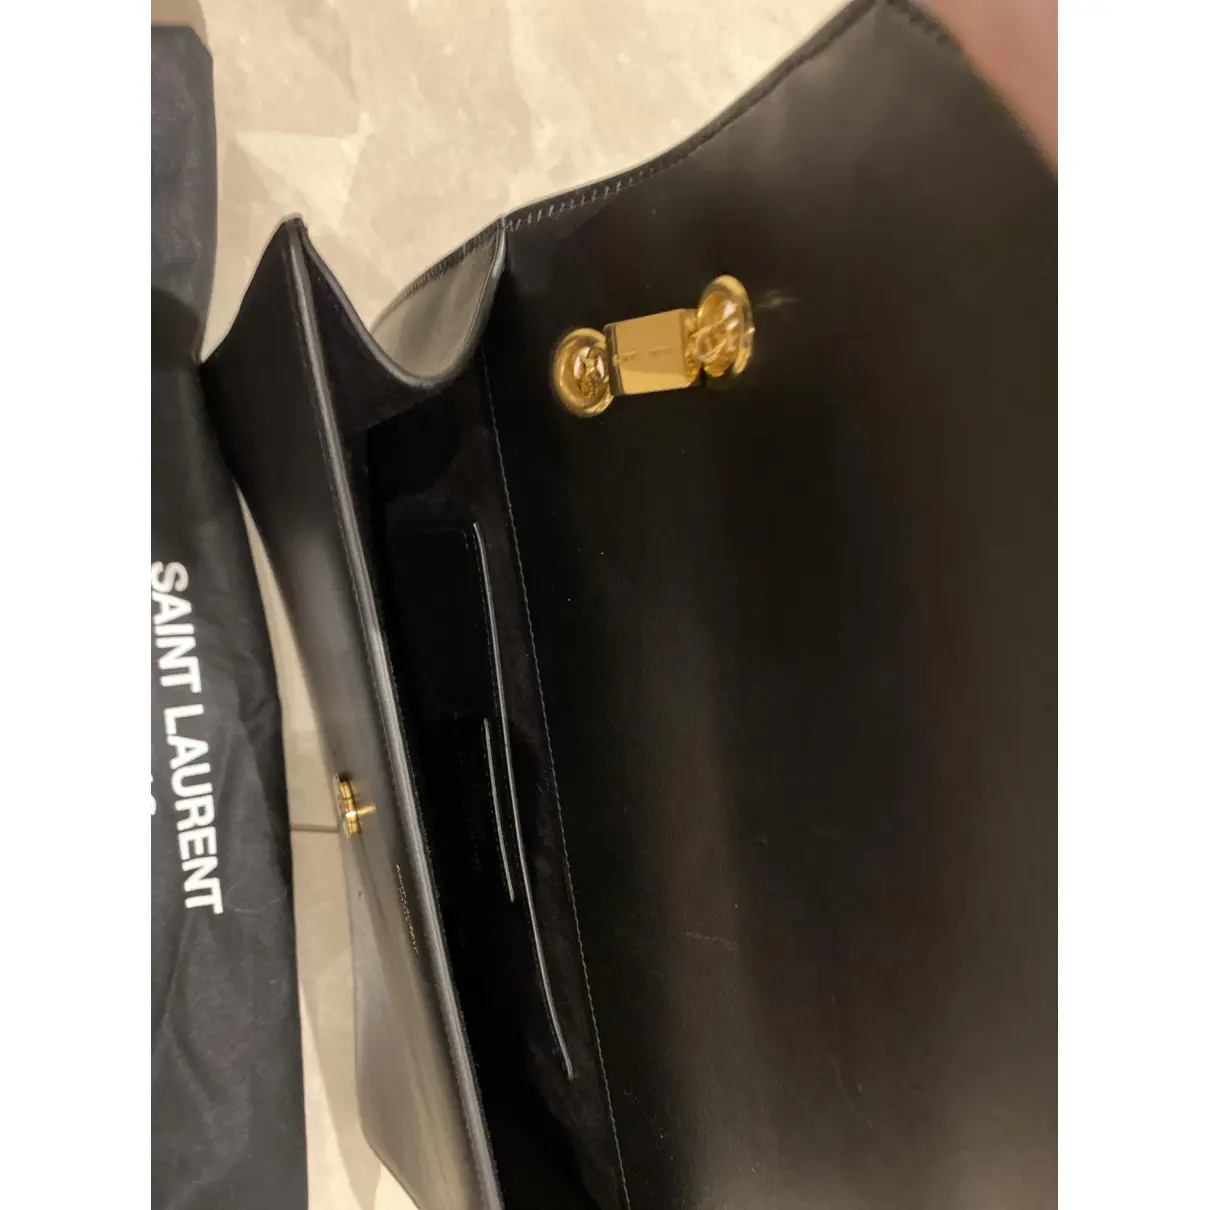 Betty leather handbag Saint Laurent